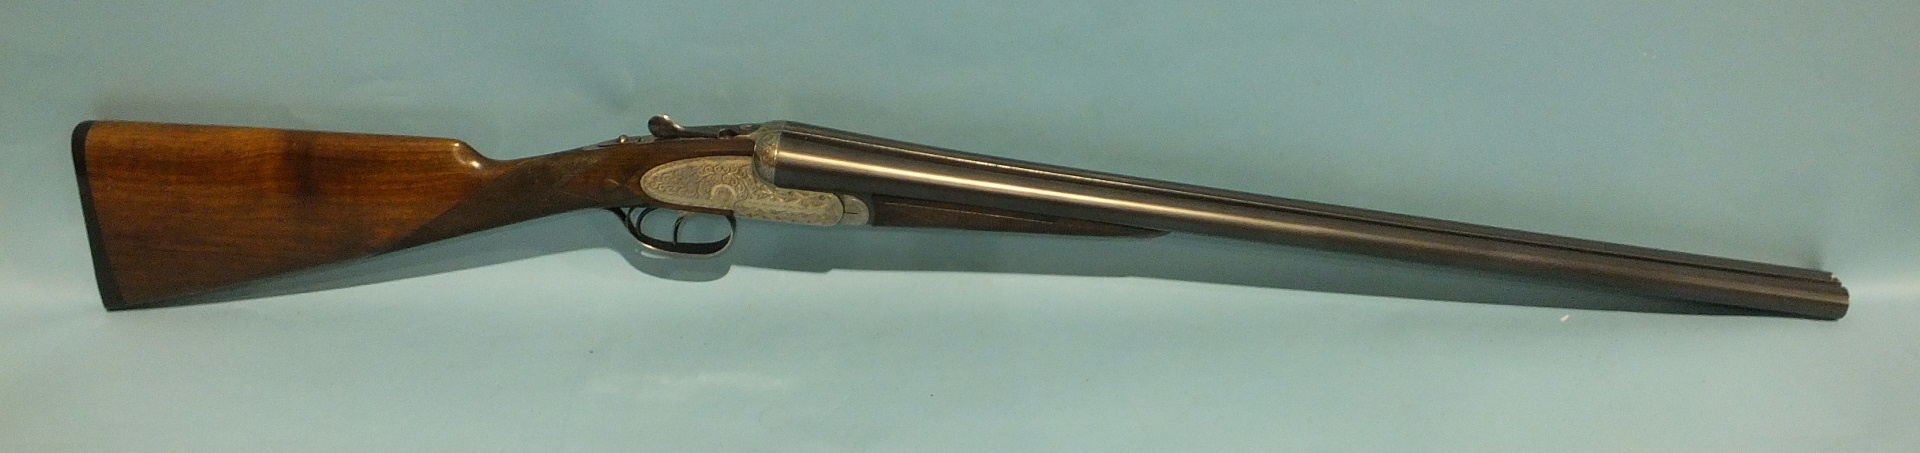 An AYA no.2 12-bore sidelock ejector shotgun, no.441691, 26" barrels with 2 3/4" chambers and